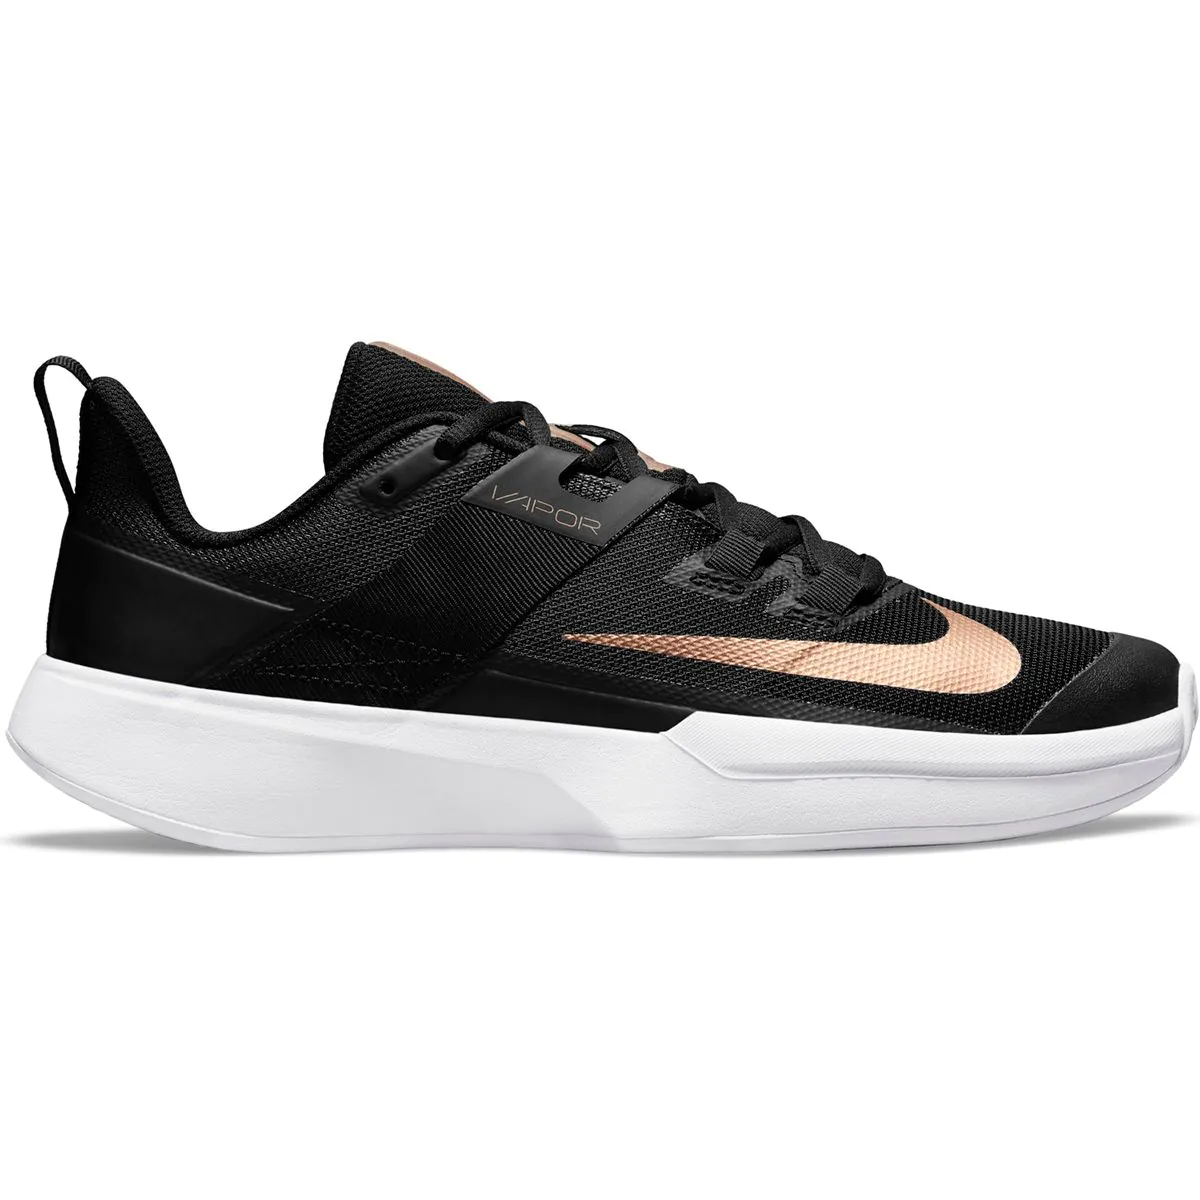 NikeCourt Vapor Lite Women's Clay Court Tennis Shoes DH2945-